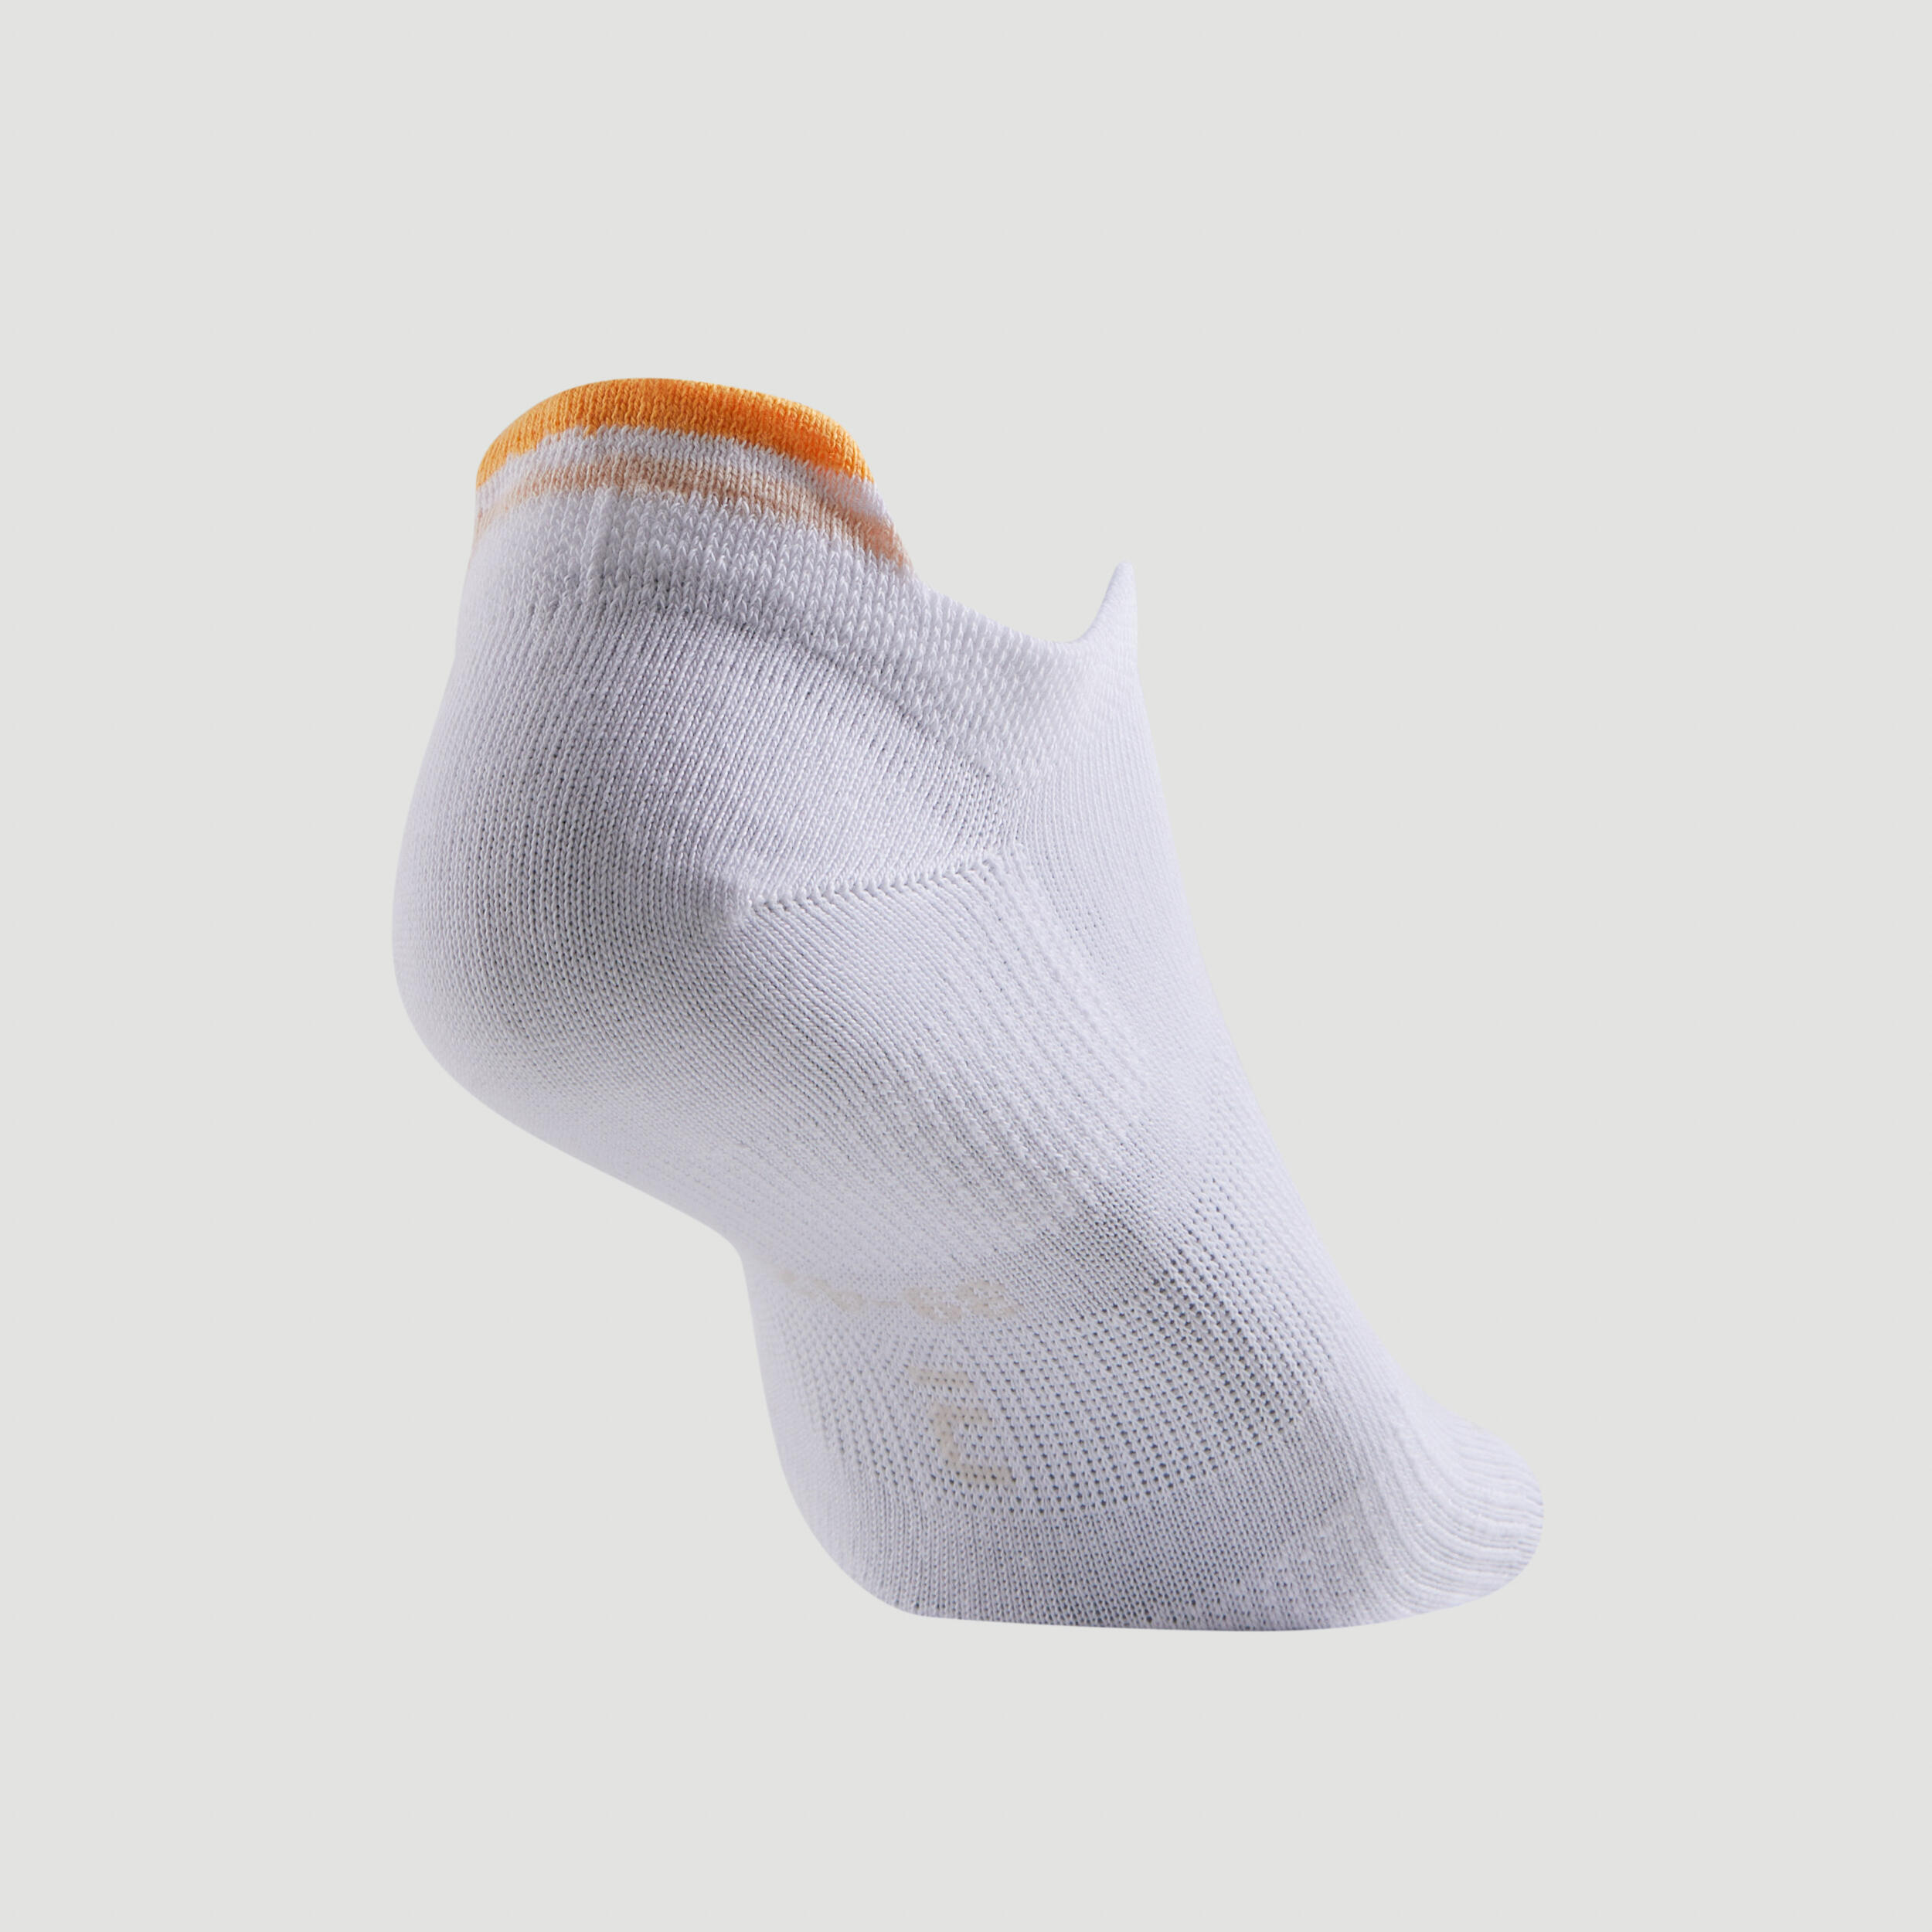 Low Sports Socks RS 160 Tri-Pack - Orange/Beige/White 9/14